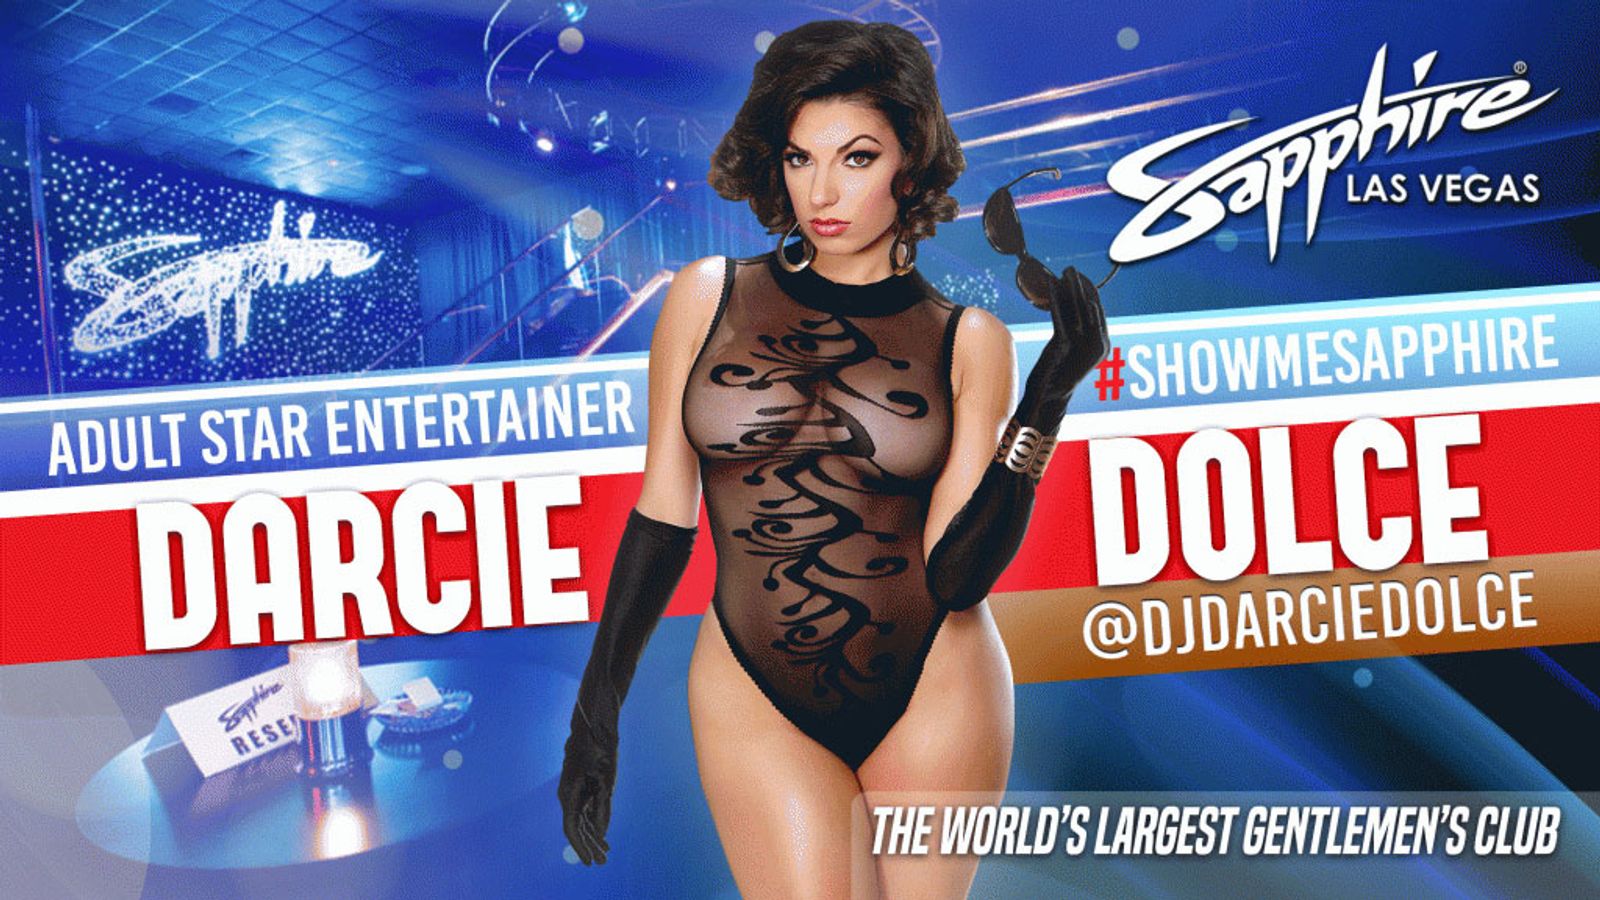 Penthouse Pet Darcie Dolce Rocks the Sapphire Las Vegas Stage Tonight